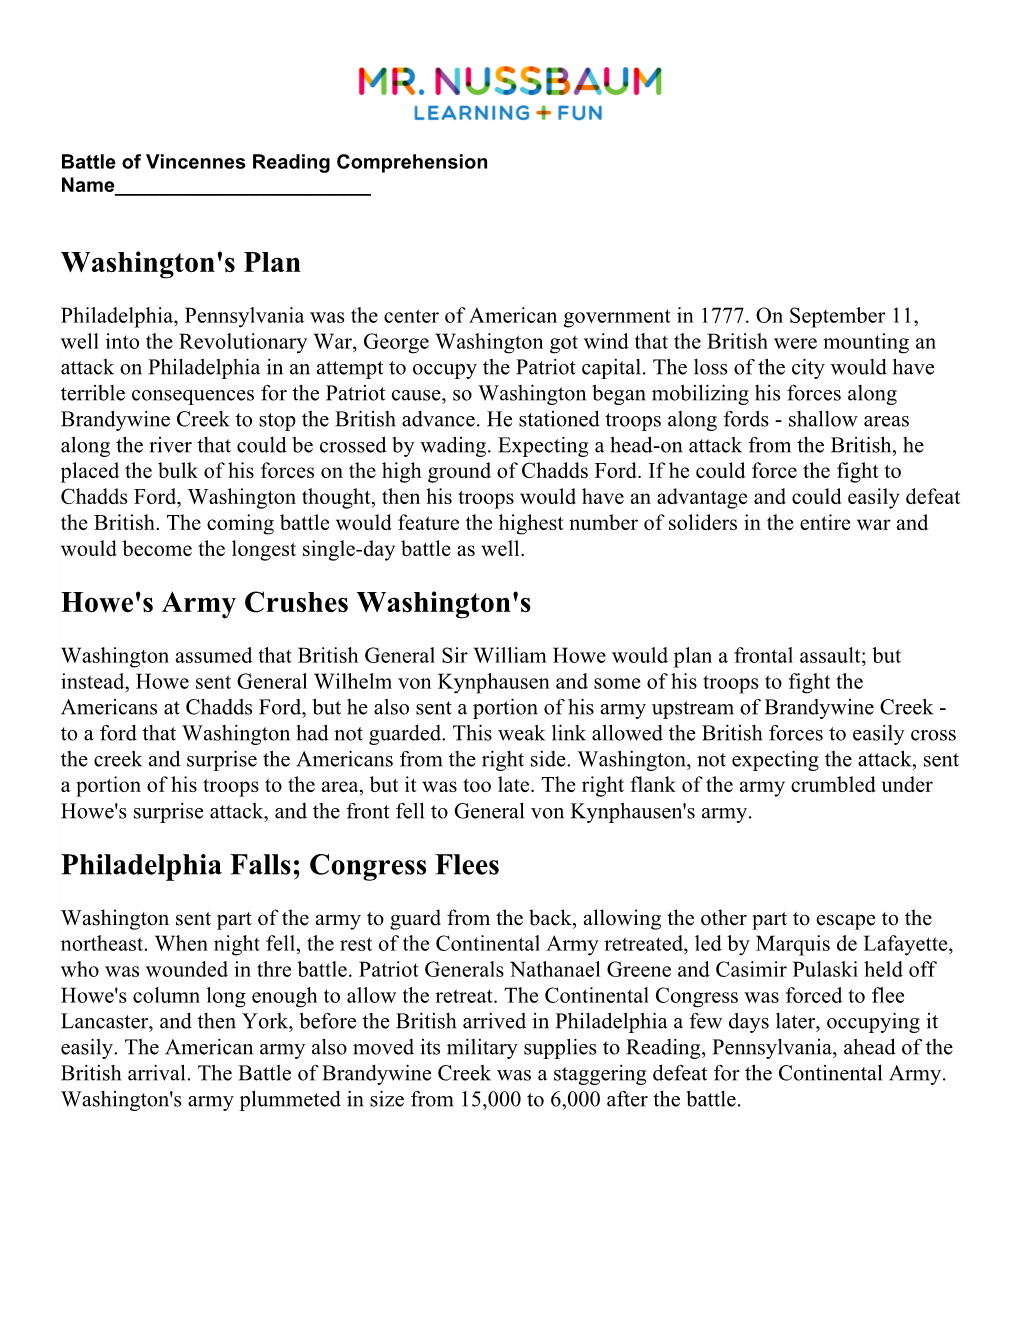 Washington's Plan Howe's Army Crushes Washington's Philadelphia Falls; Congress Flees